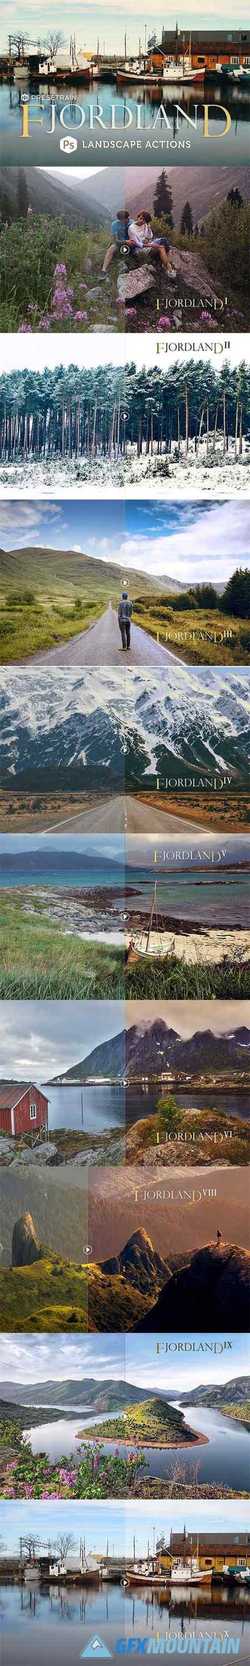 Fjordland Landscape Photoshop Actions